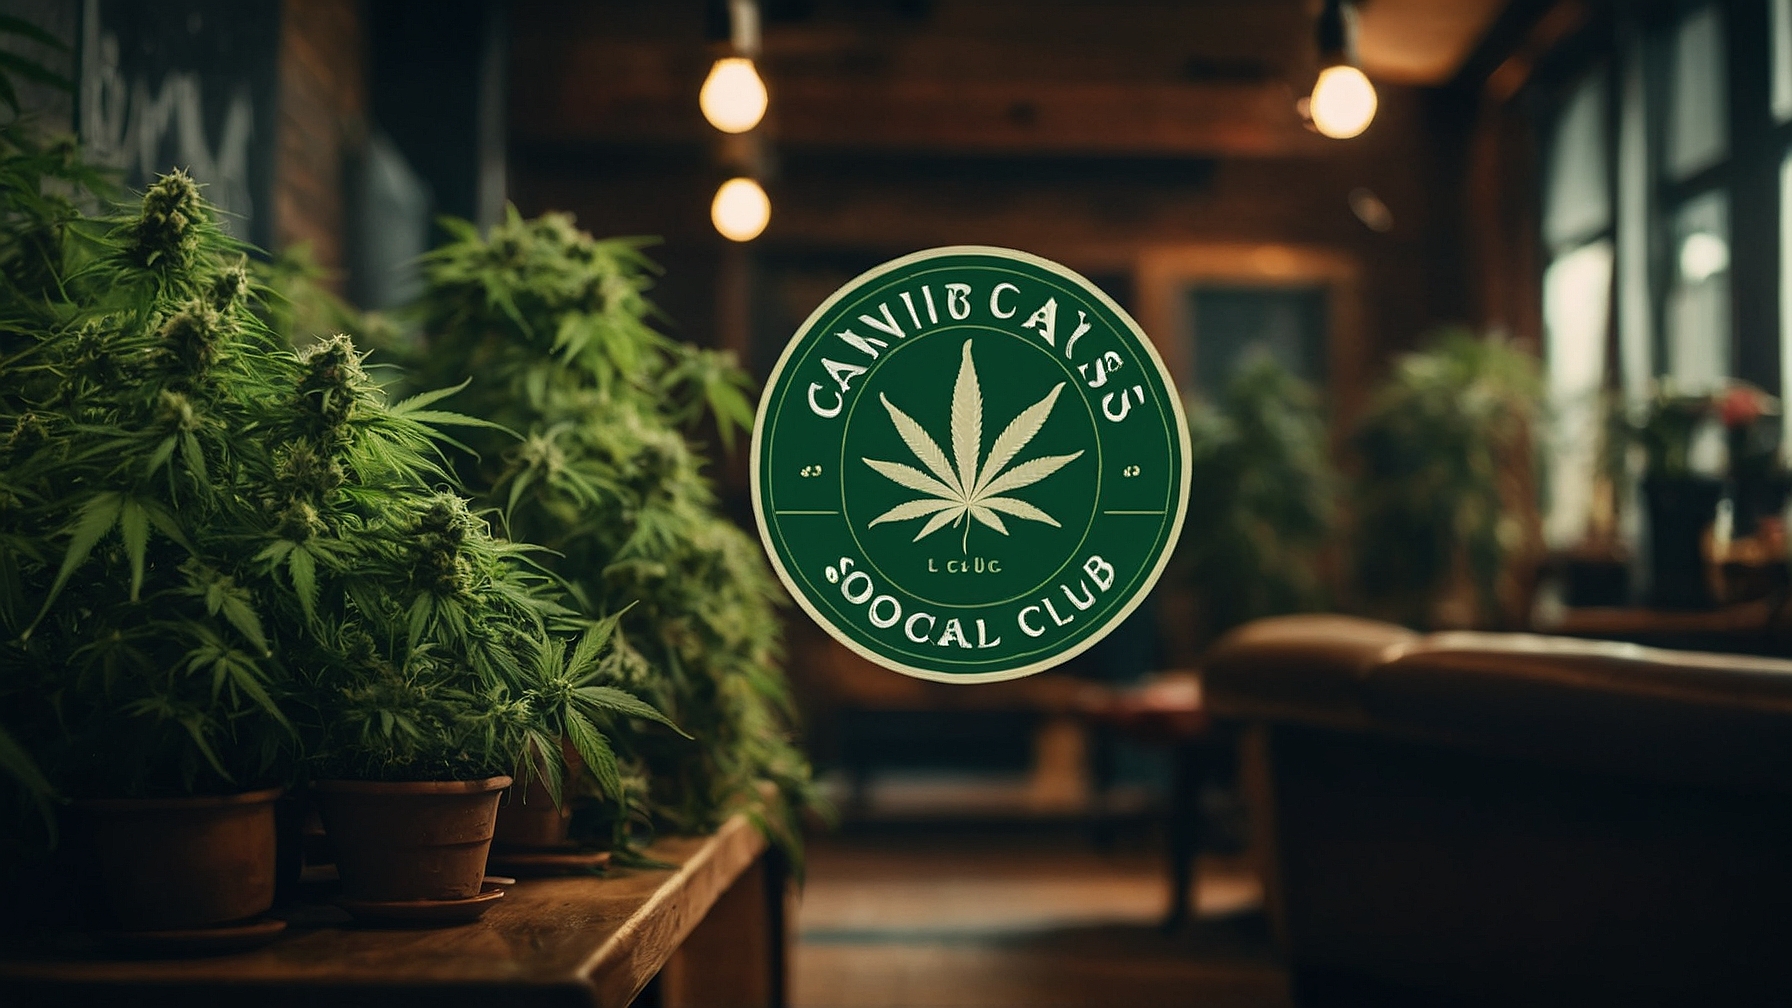 Leonardo_Diffusion_XL_cannabis_social_club_logo_green_plant_i_1